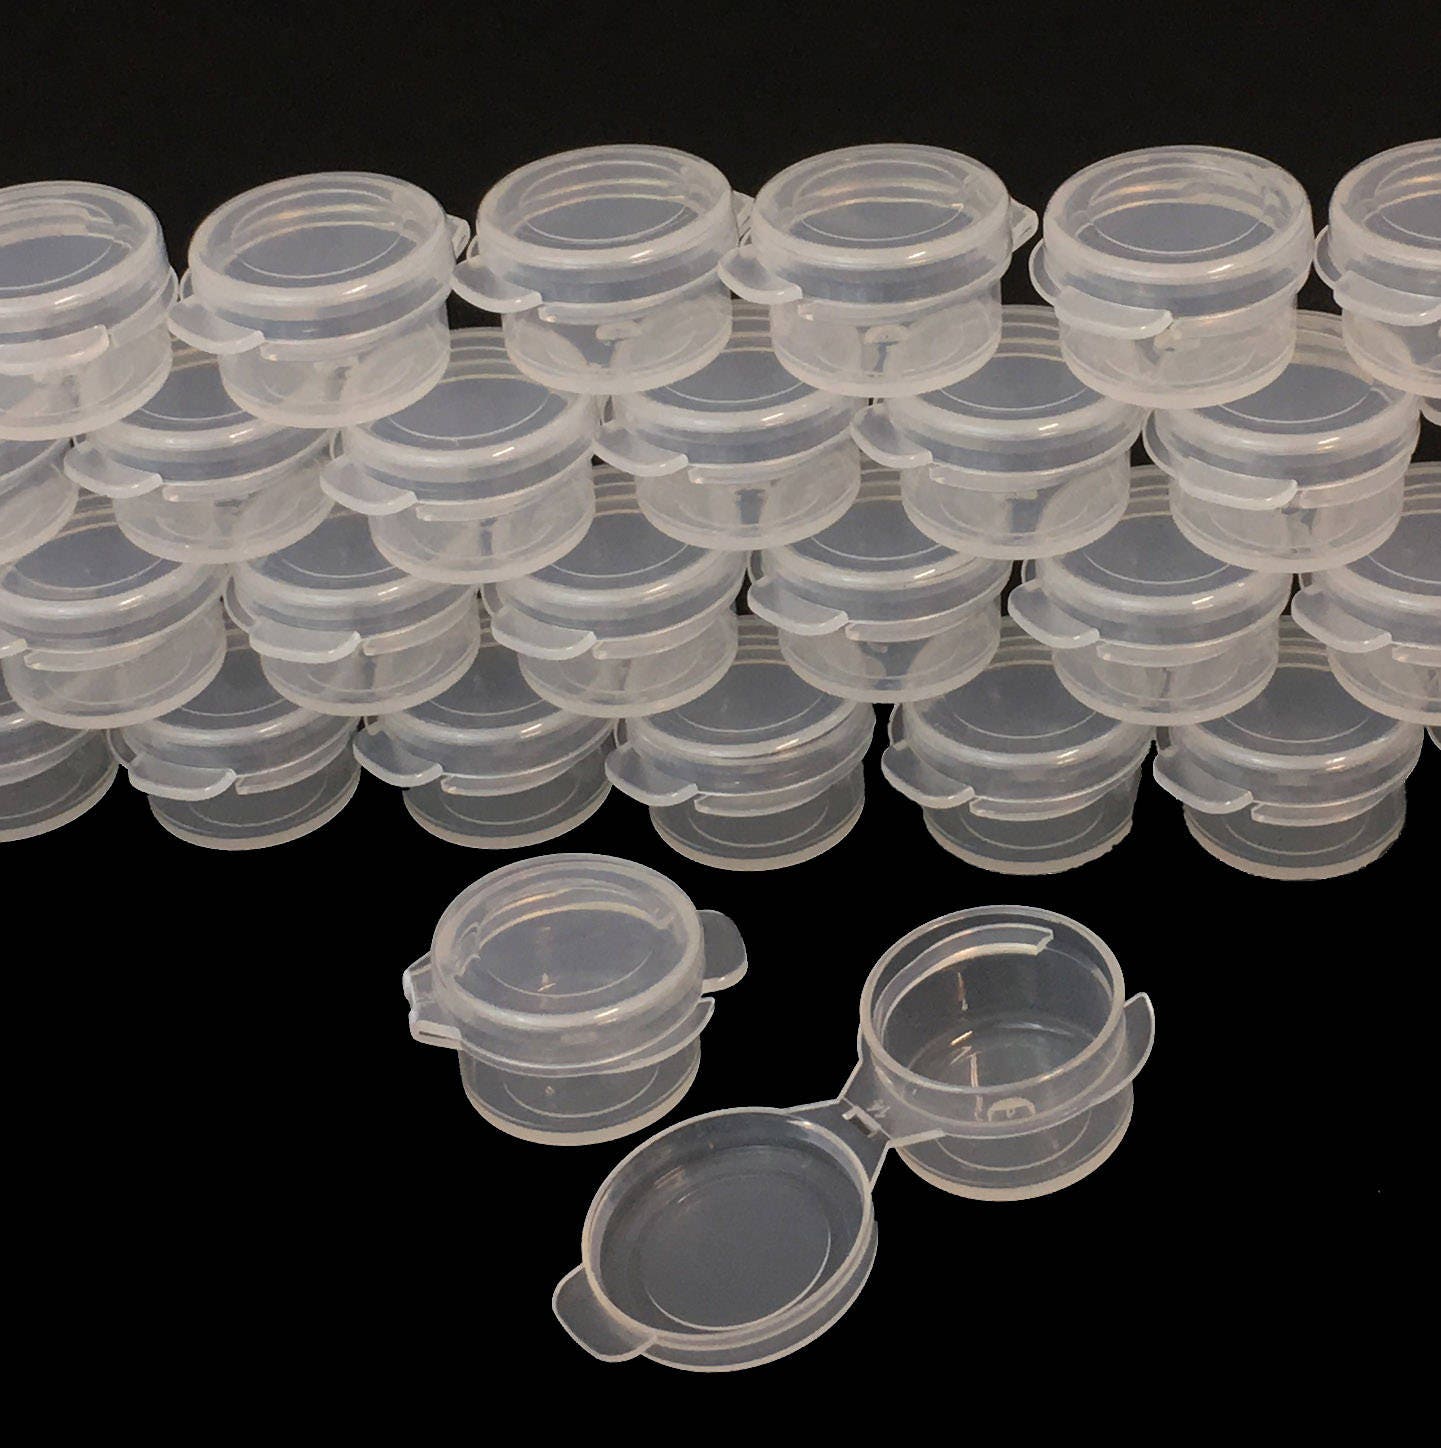 6 Pcs Craft Organizer Plastic Box Nail Jewelry Bead Storage Container US  Seller Bx-168 